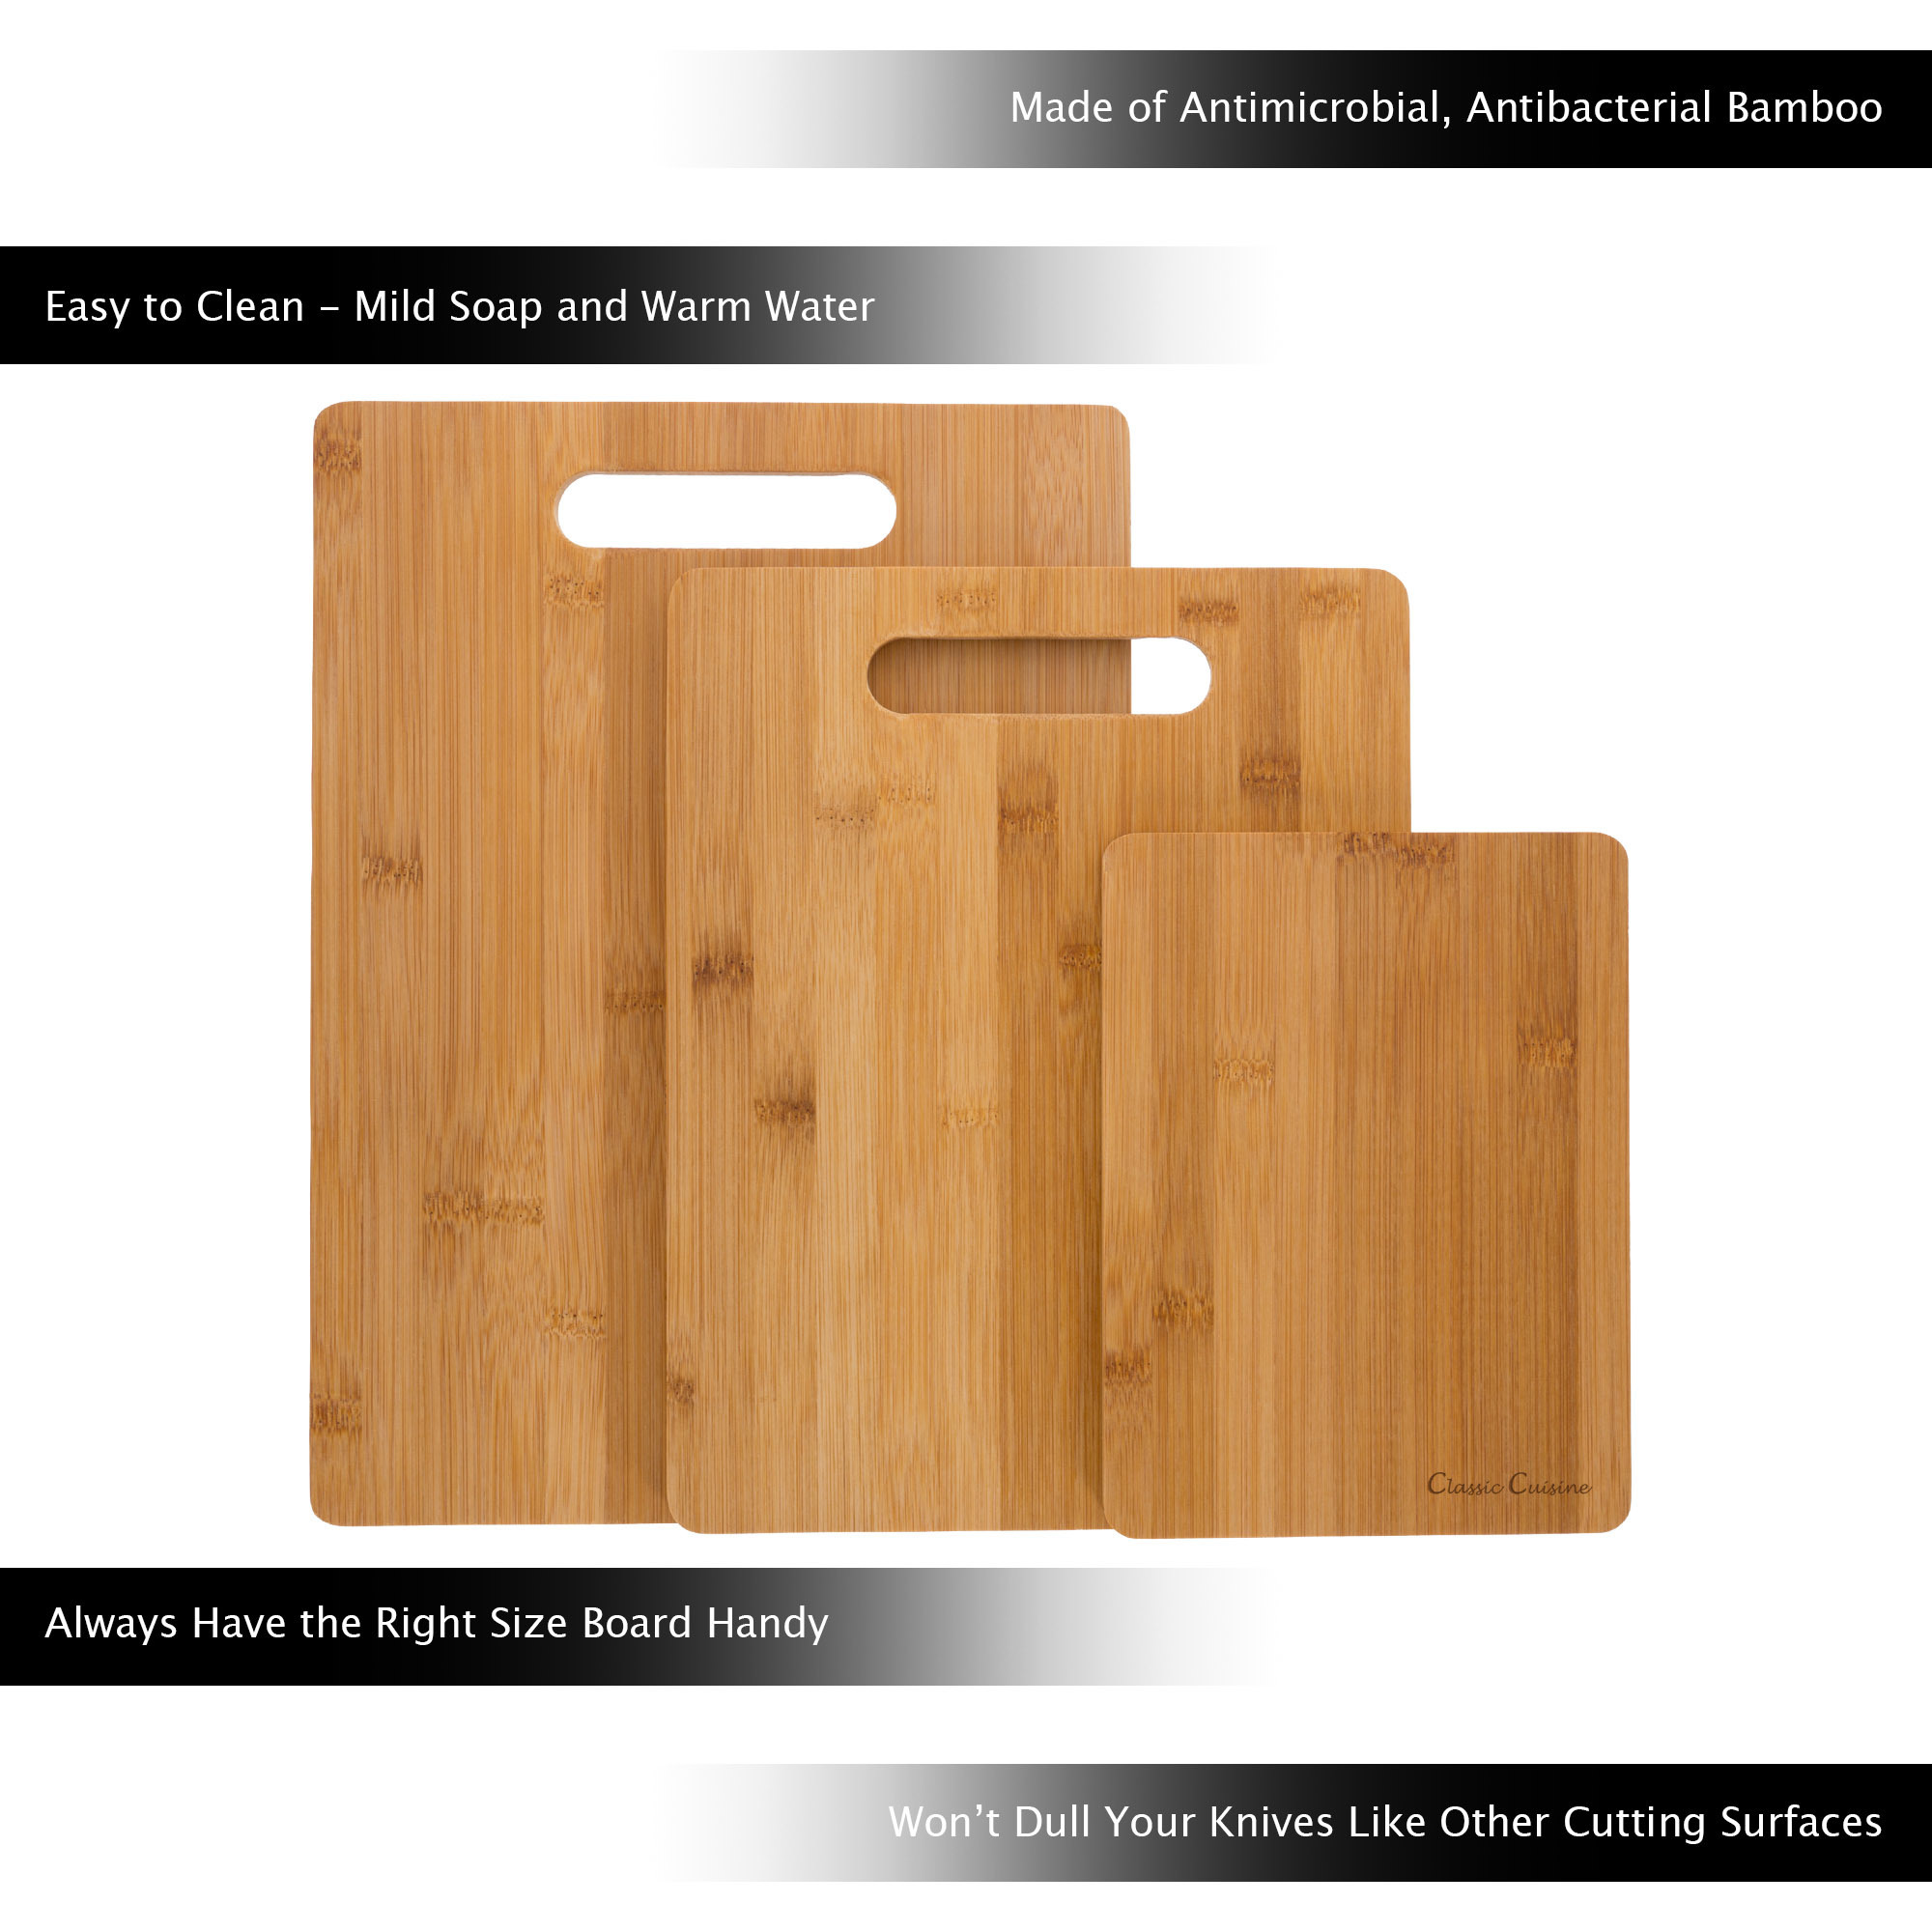 https://ak1.ostkcdn.com/images/products/17855121/Classic-Cuisine-3-Piece-Bamboo-Cutting-Board-Set-83e59ad3-c307-47e6-9e41-ad82fc5ad867.jpg